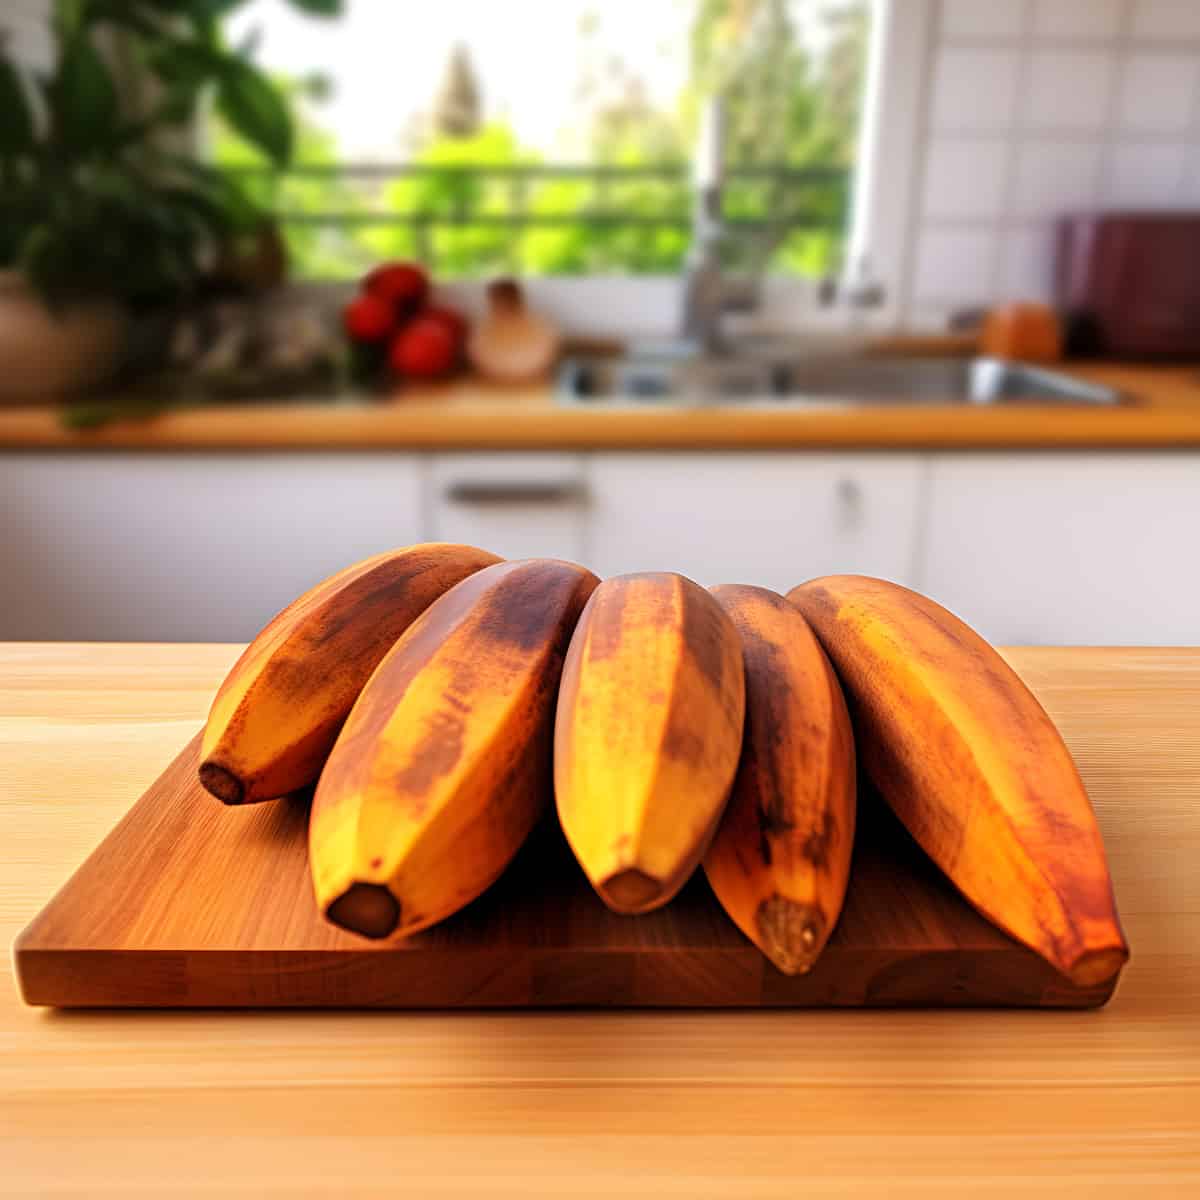 Fei Banana on a kitchen counter